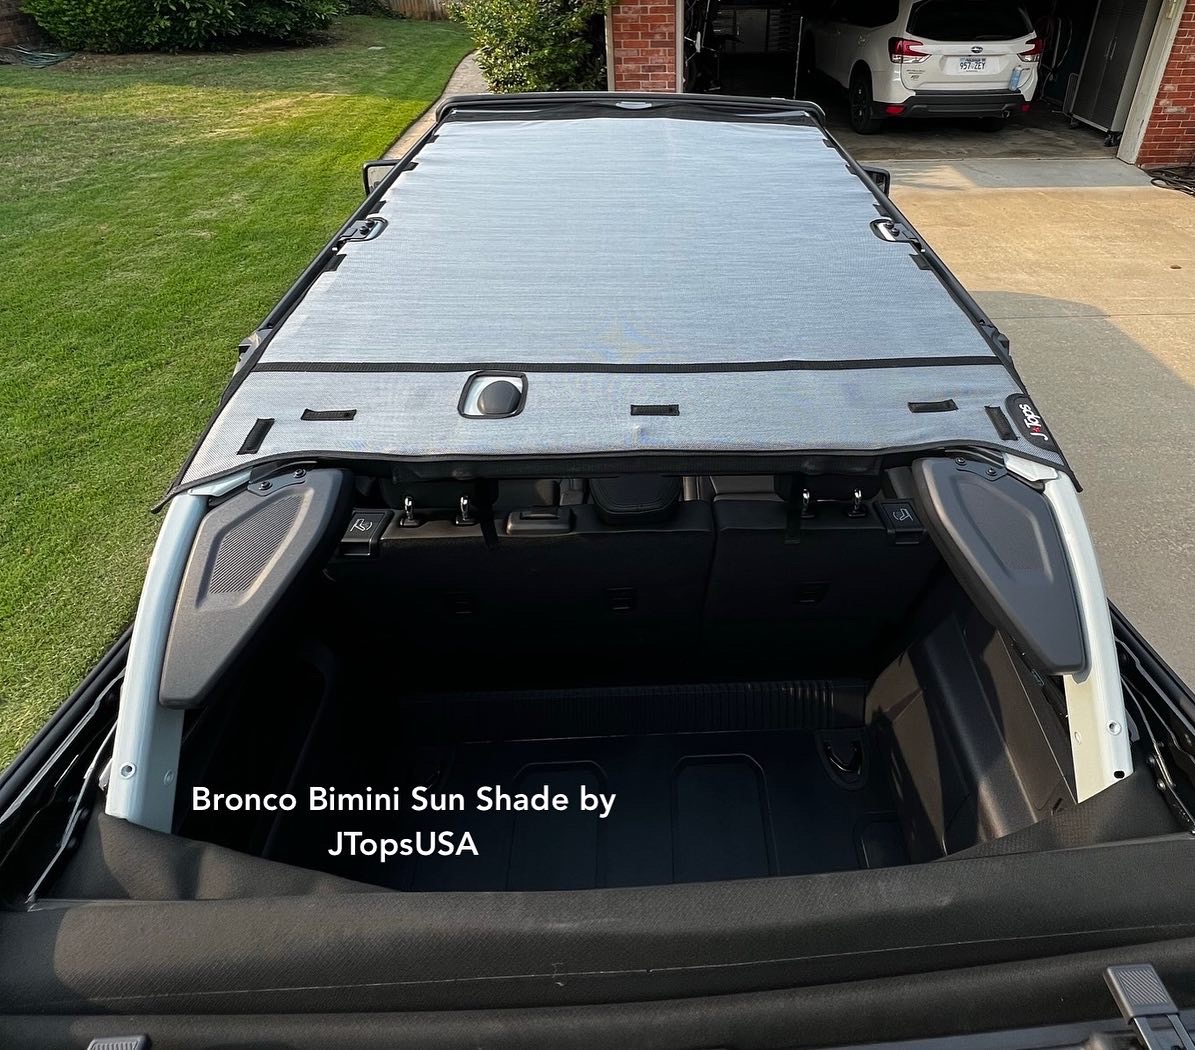 Ford Bronco JTopsUSA Announces Bimini Sun Shades for the 2/4 door hard tops! CF1C67B9-E900-4A59-B786-7AB62F3E1D0B